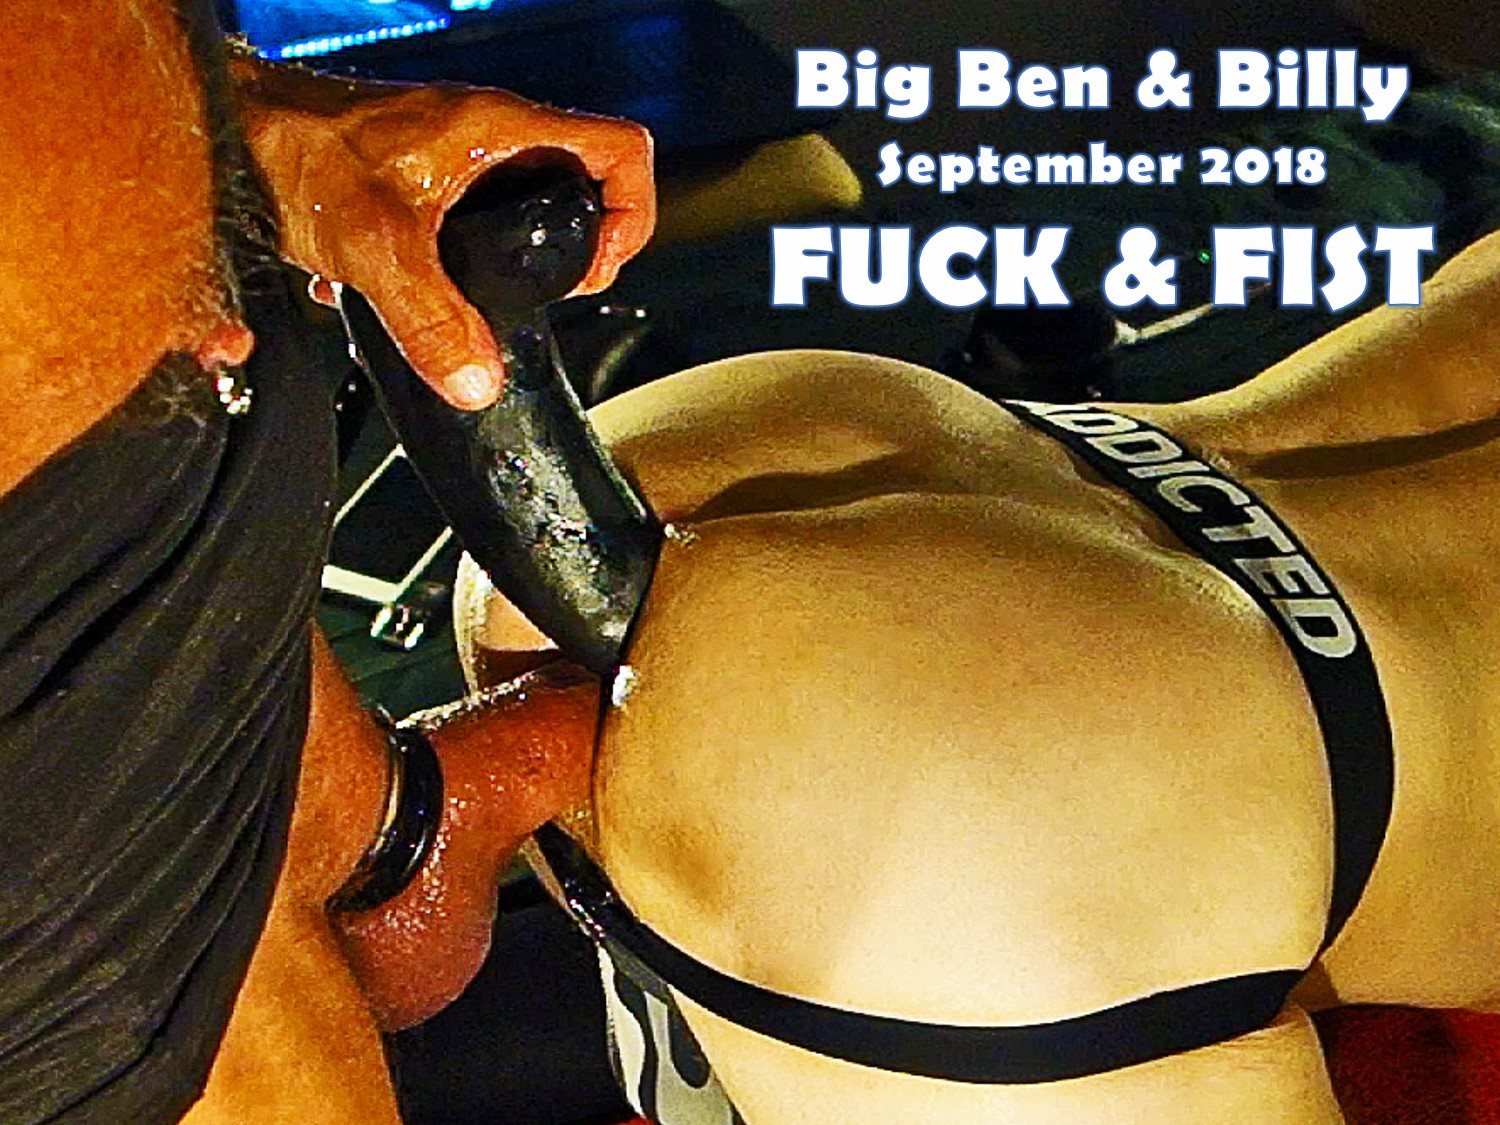 47. Big Ben & Billy September 2018 - FUCK & FIST